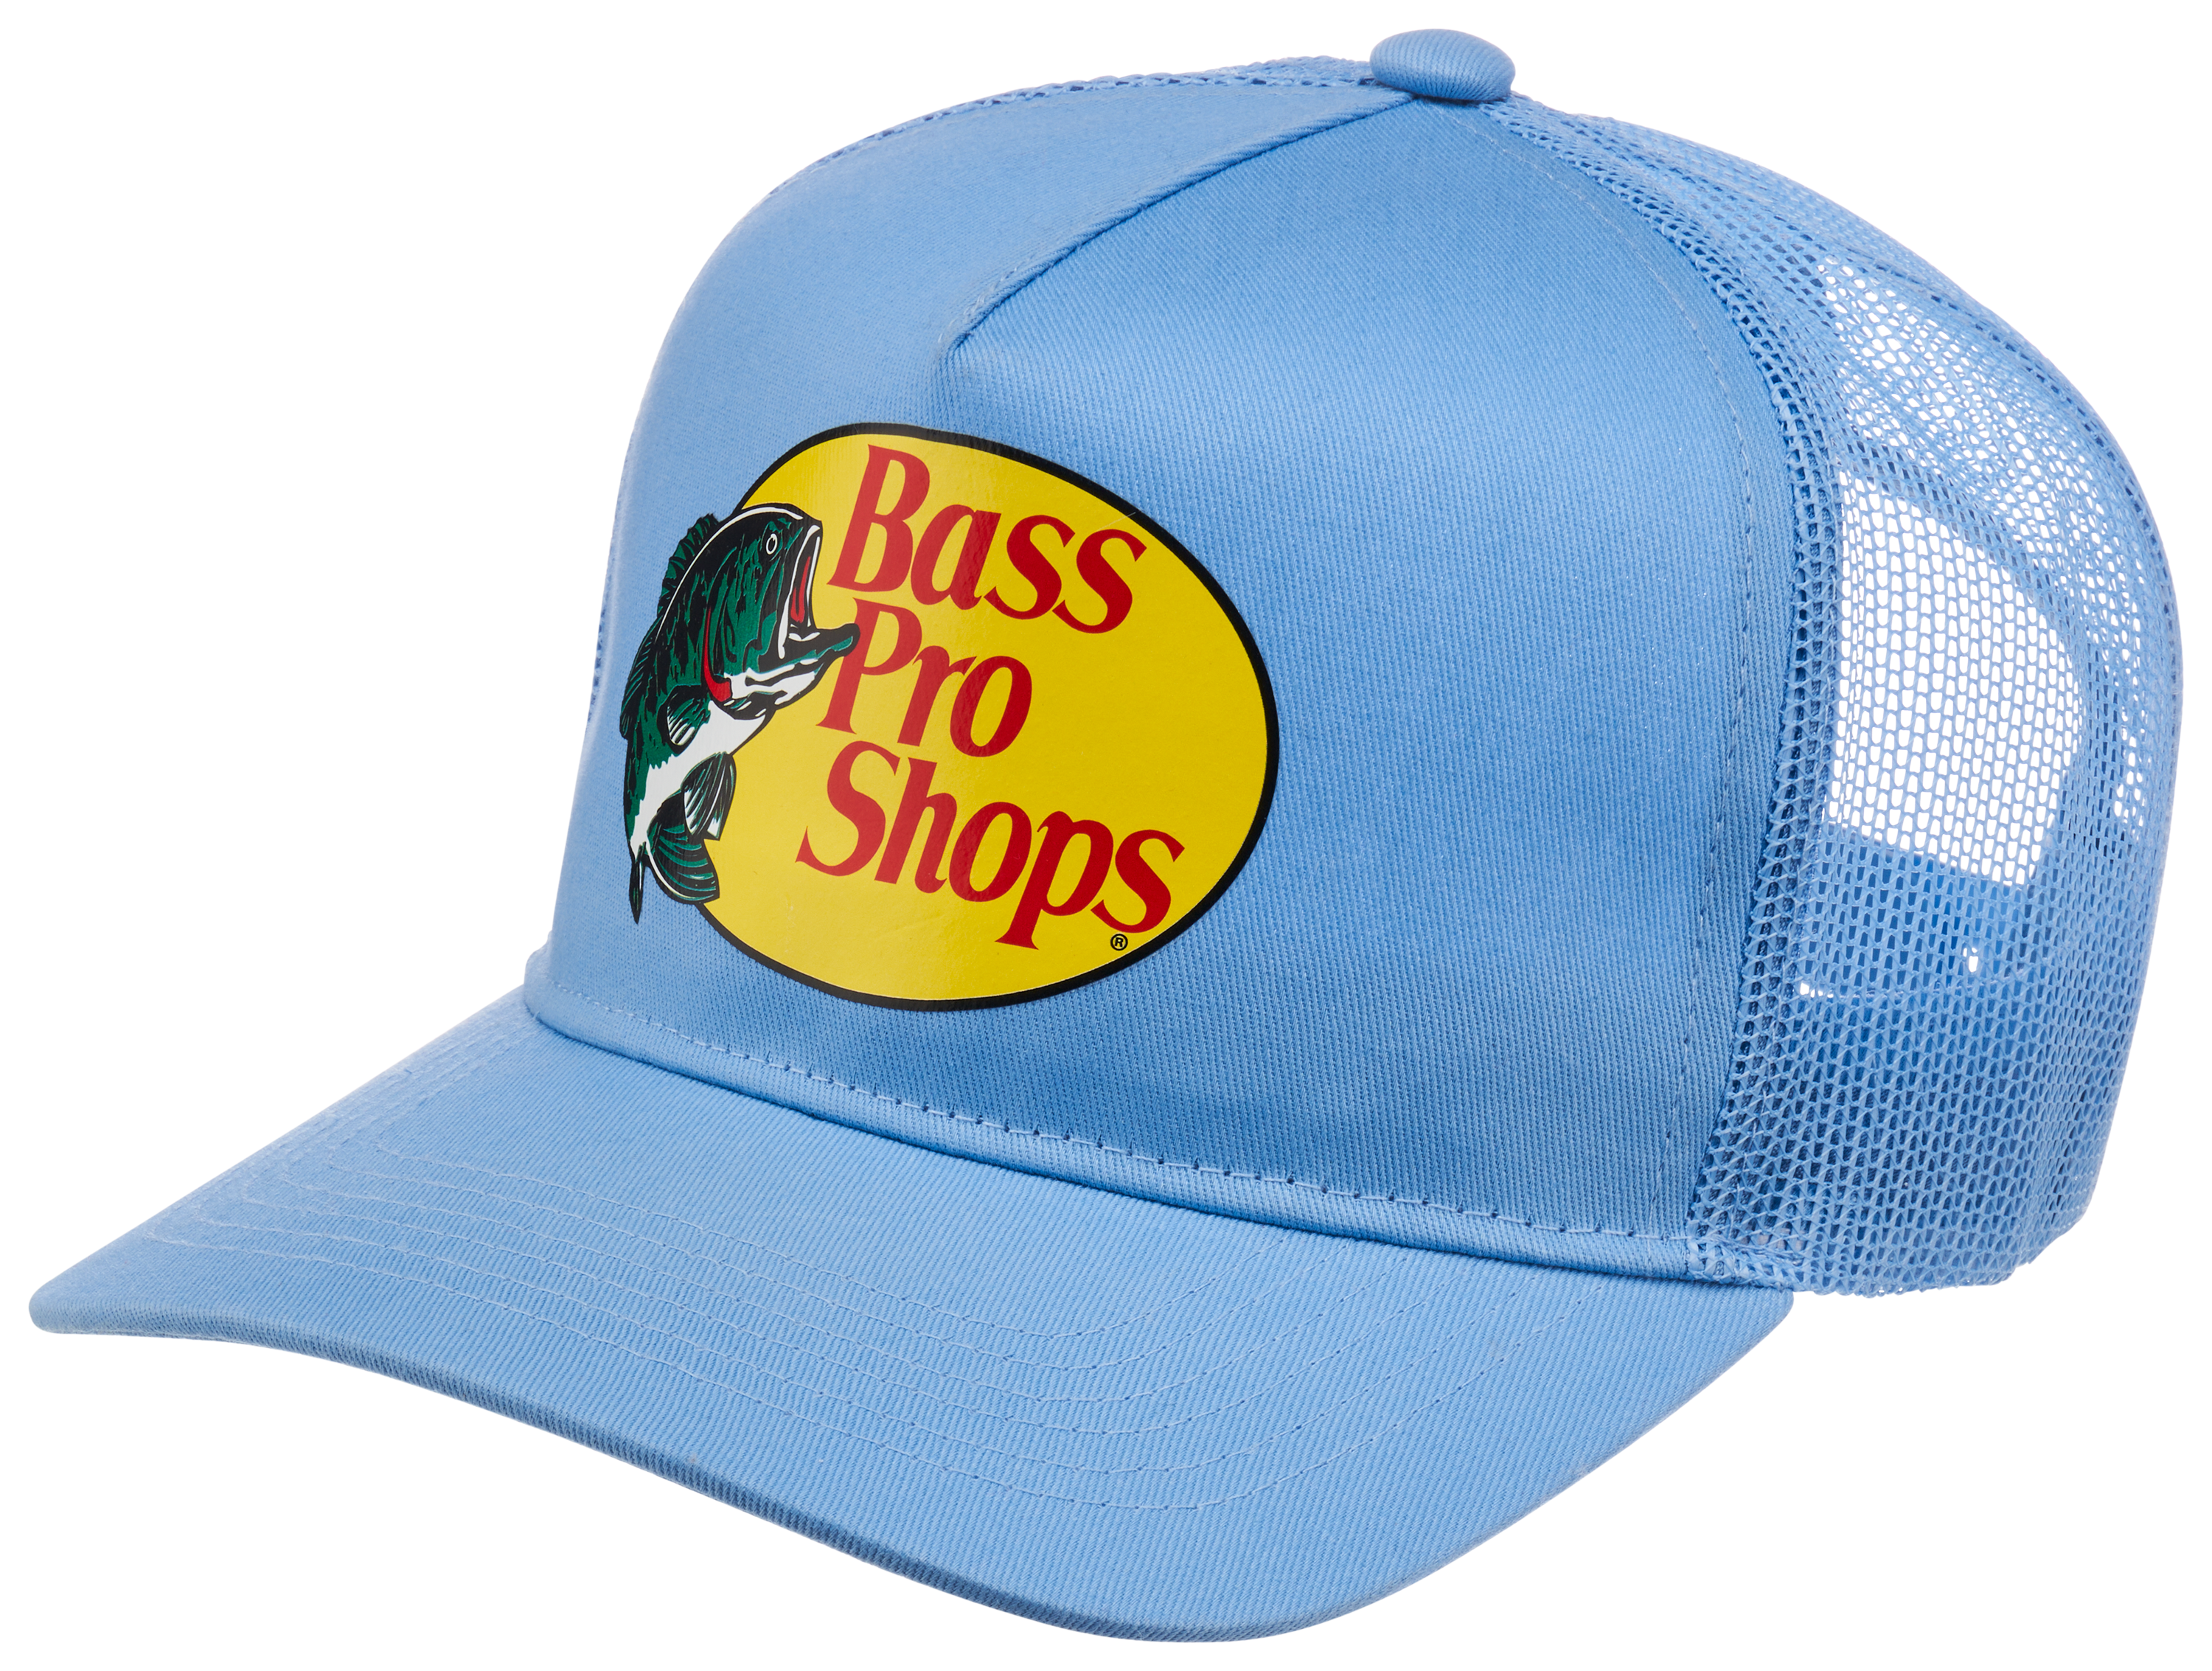 Bass Pro Shop Children's Contrast hip hop baseball cap Green One Size  Adjustable Snapback Hat 